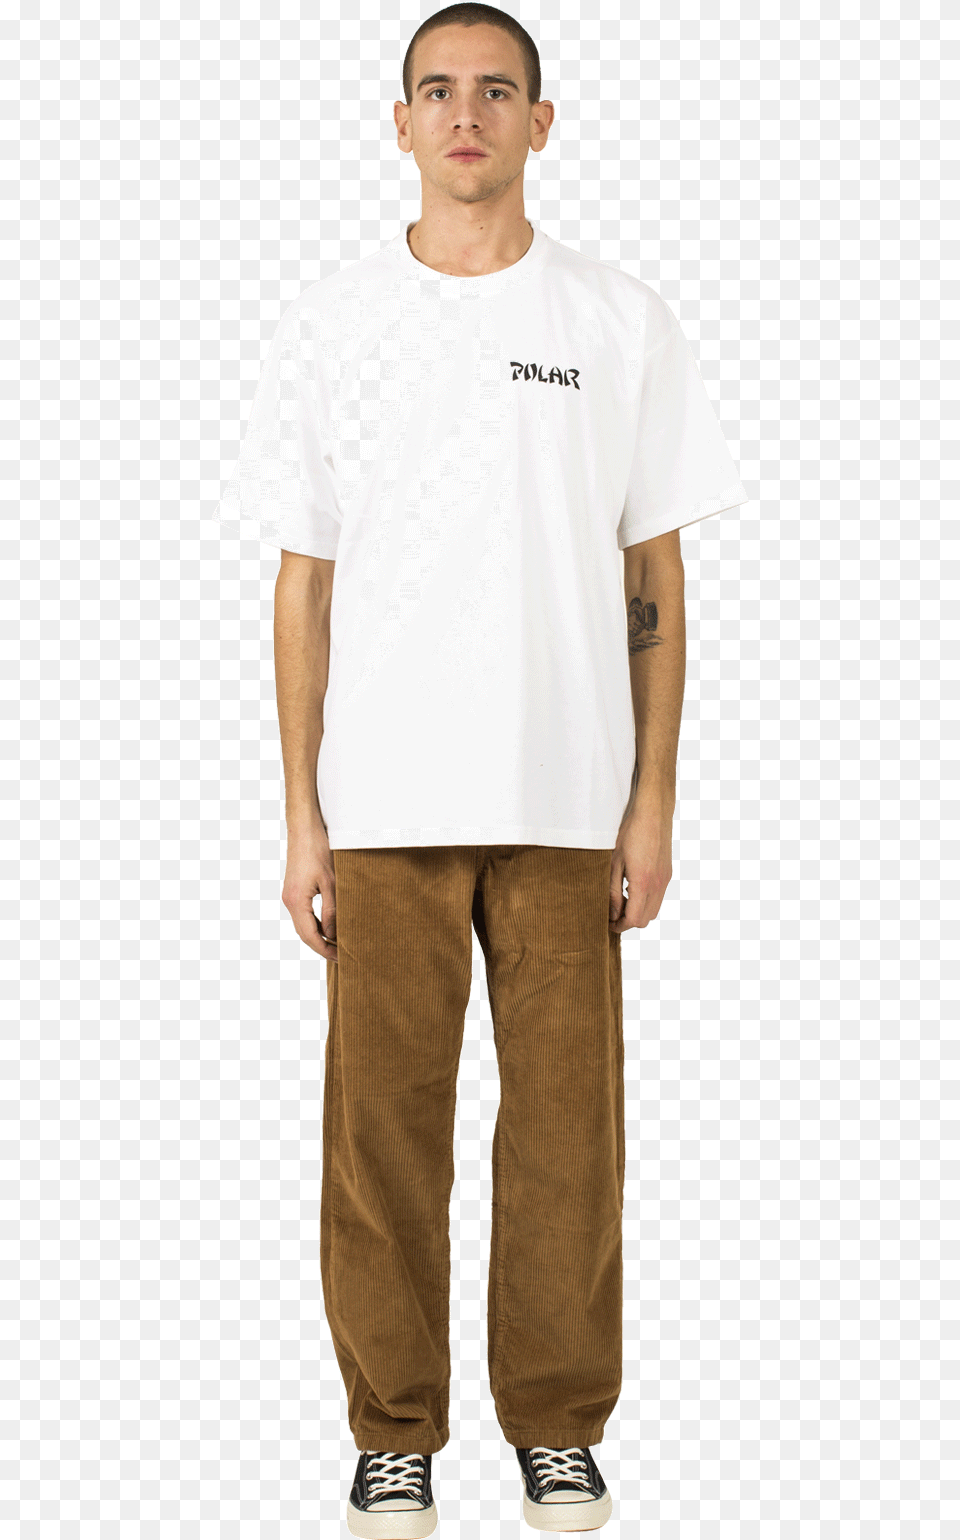 Polar T Shirts Torso Tee White Polteeto Standing, Clothing, T-shirt, Boy, Person Png Image